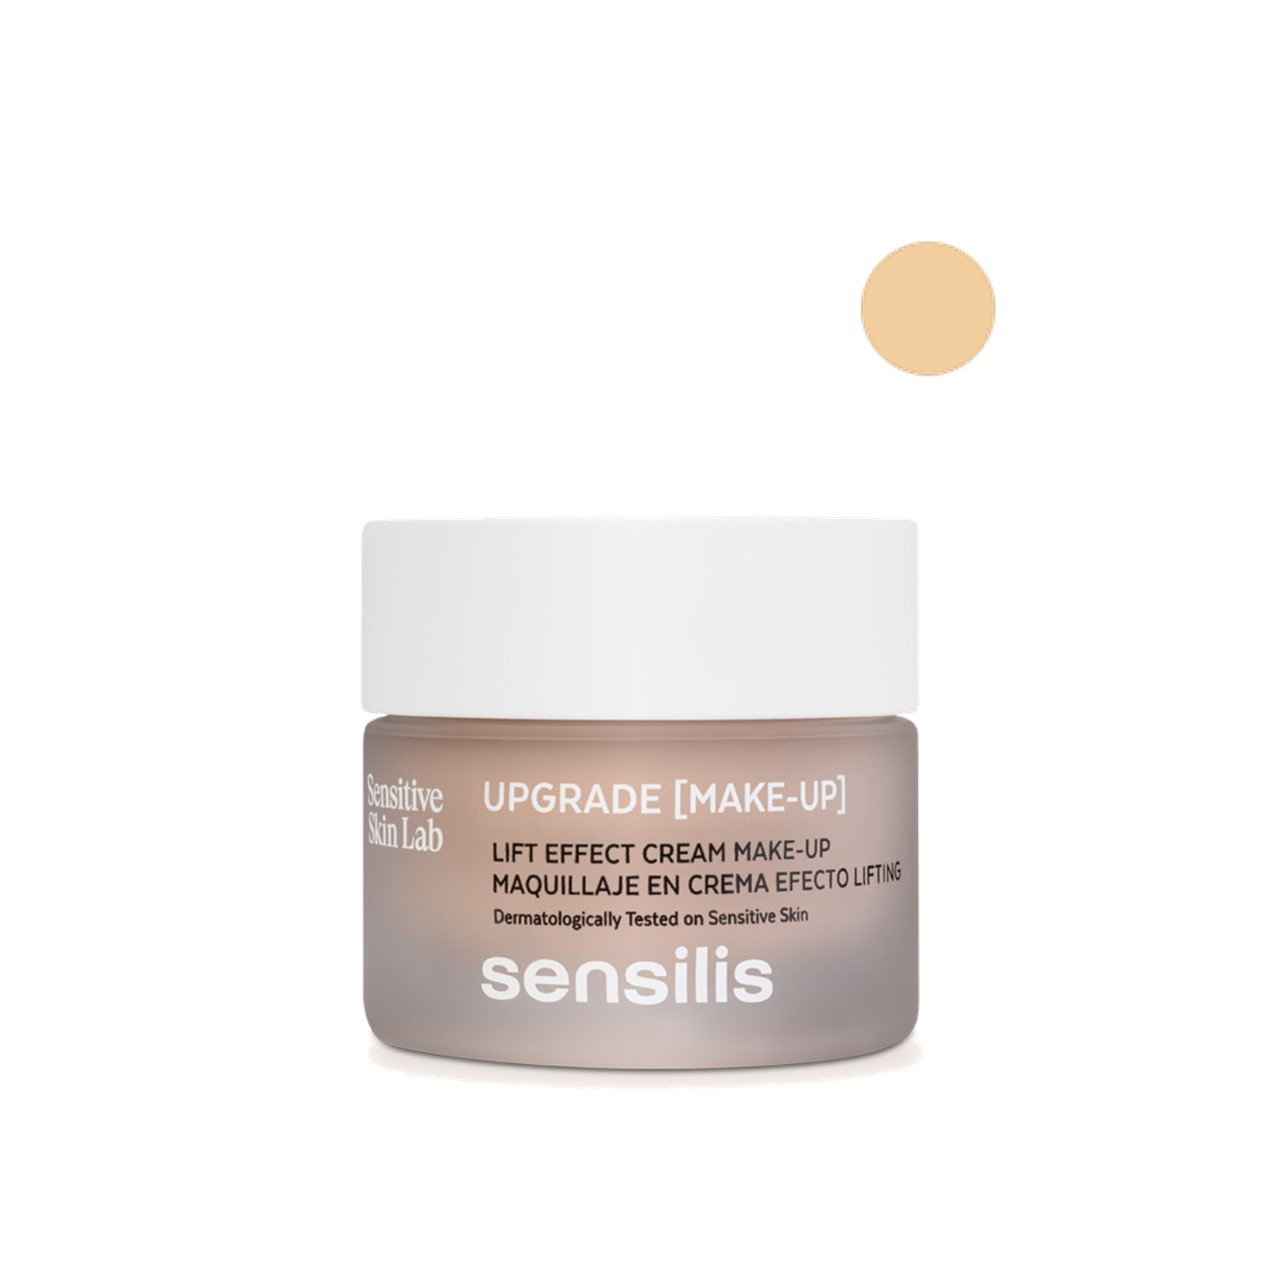 Sensilis Upgrade [Make-Up] Lift Effect Cream 02 Miel Rose 30ml